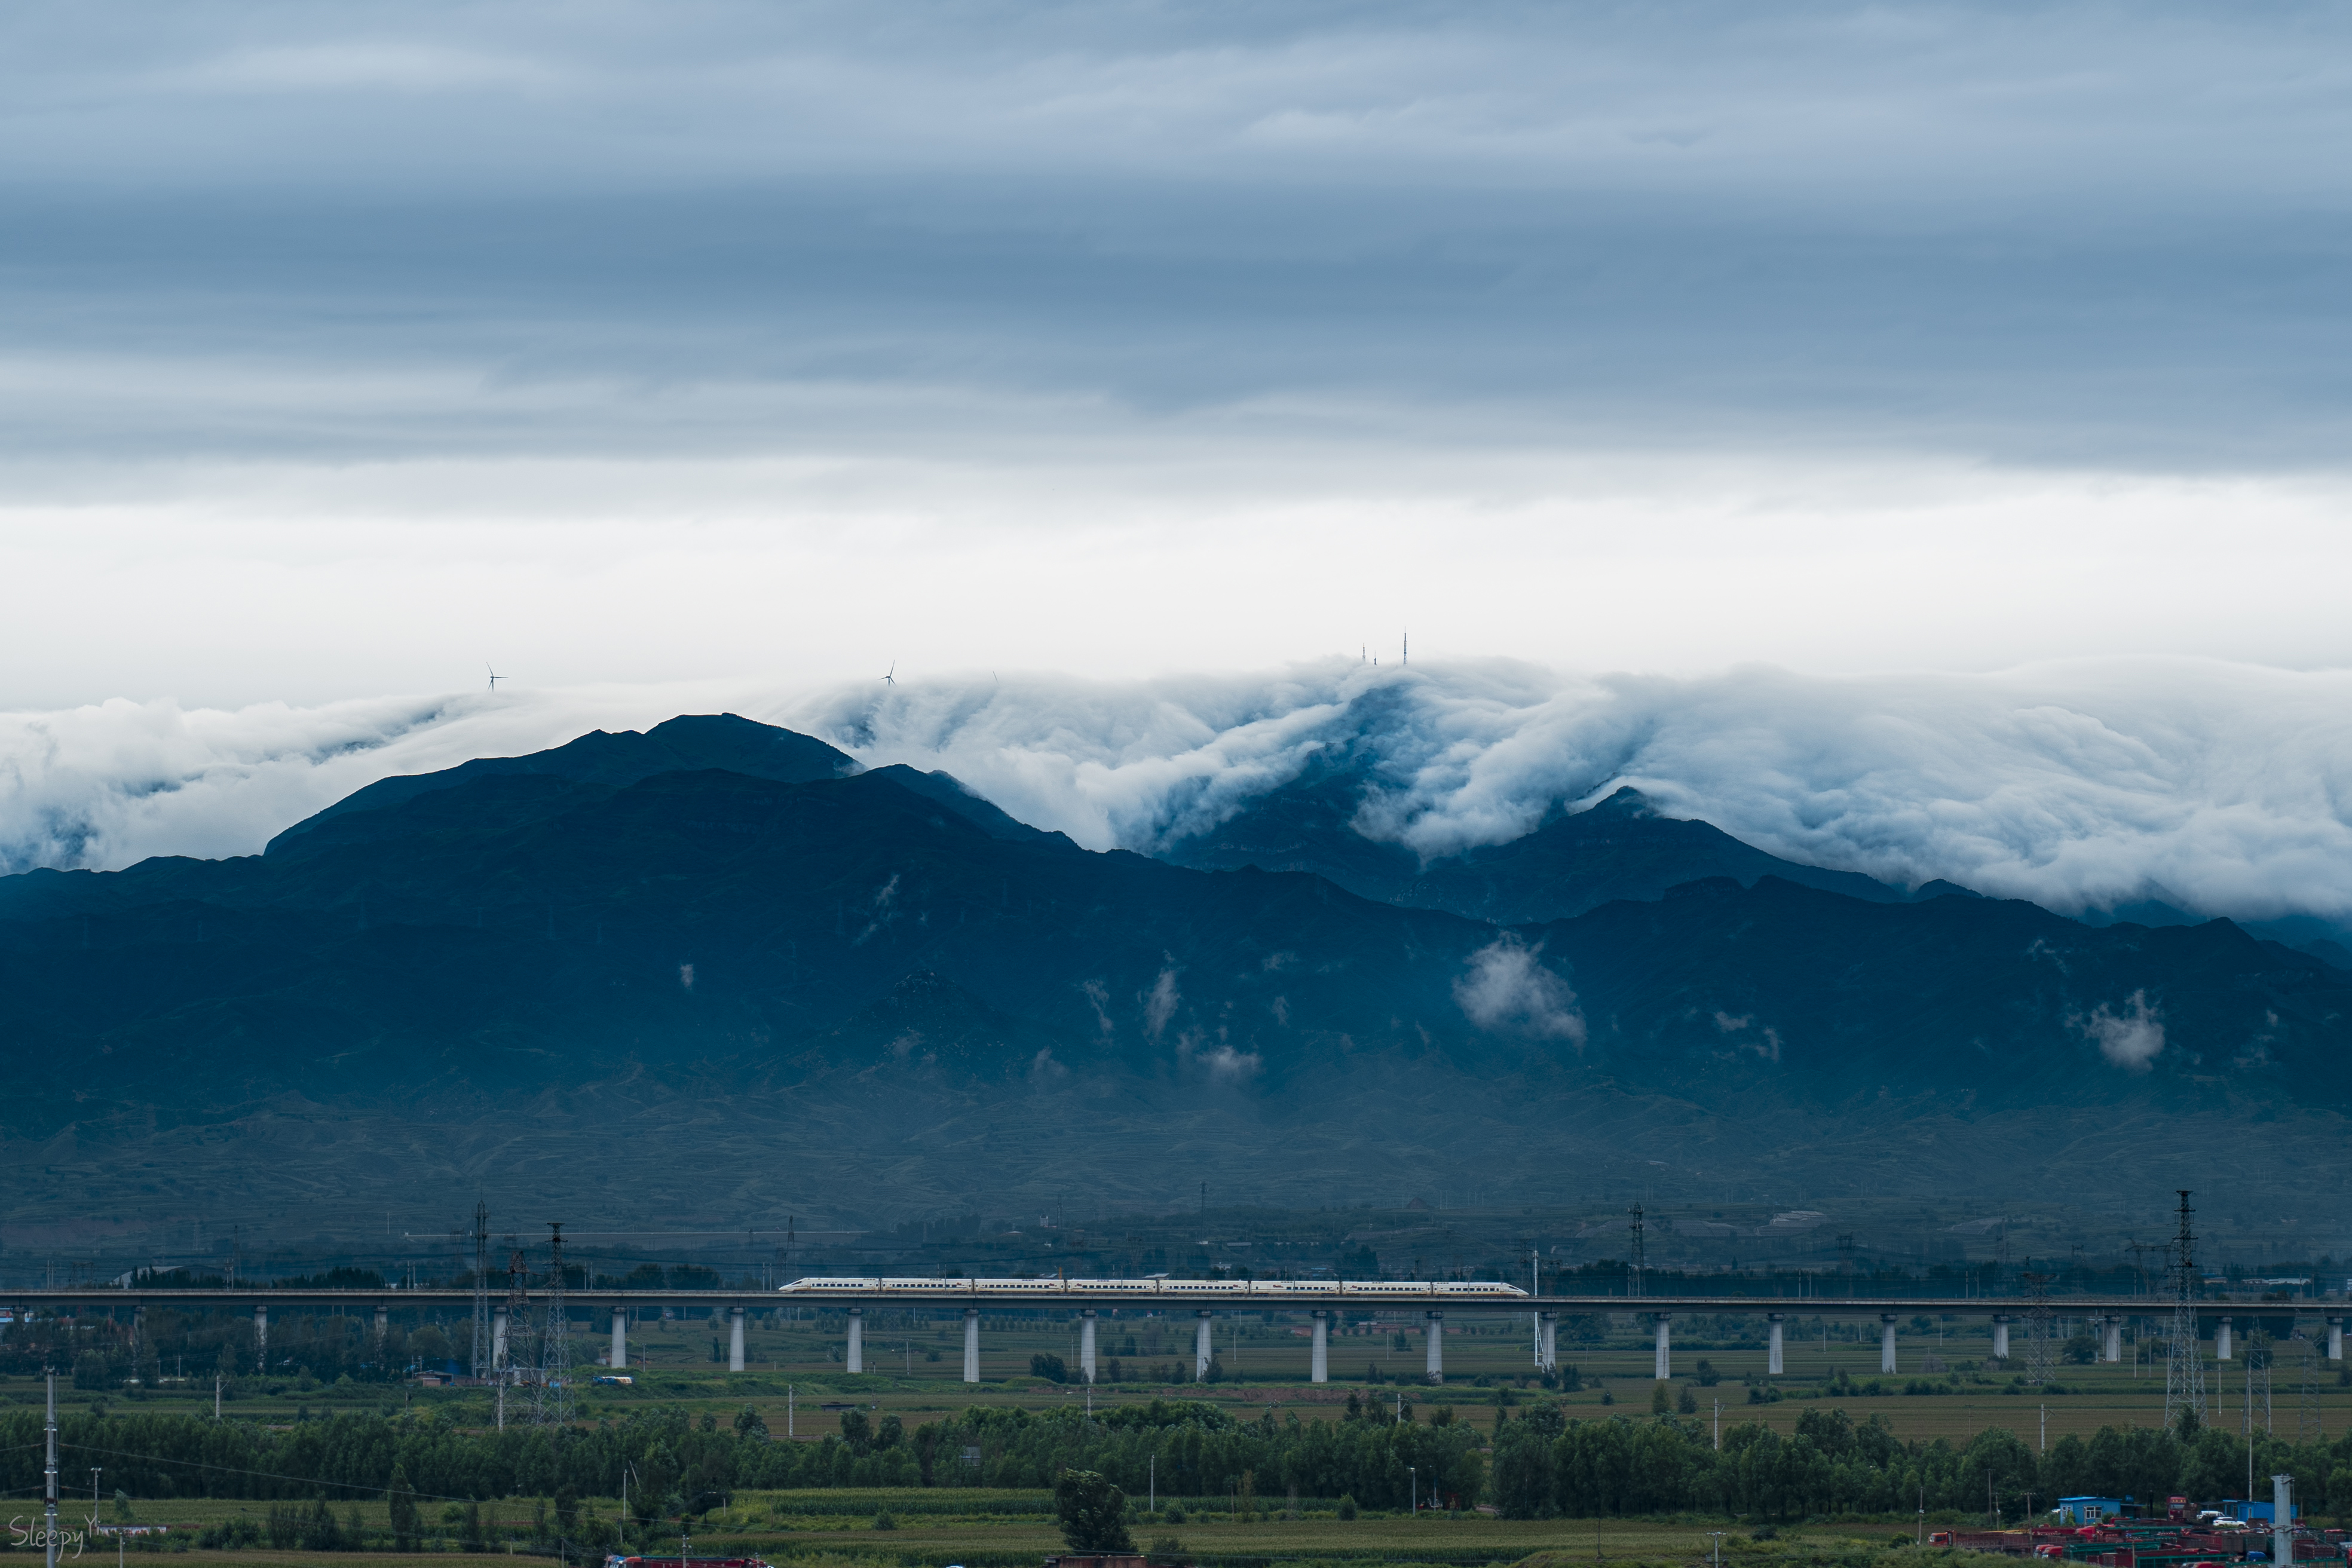 General 3936x2624 mountains clouds railway sleepy mist wind turbine power plant Asia China shanxi